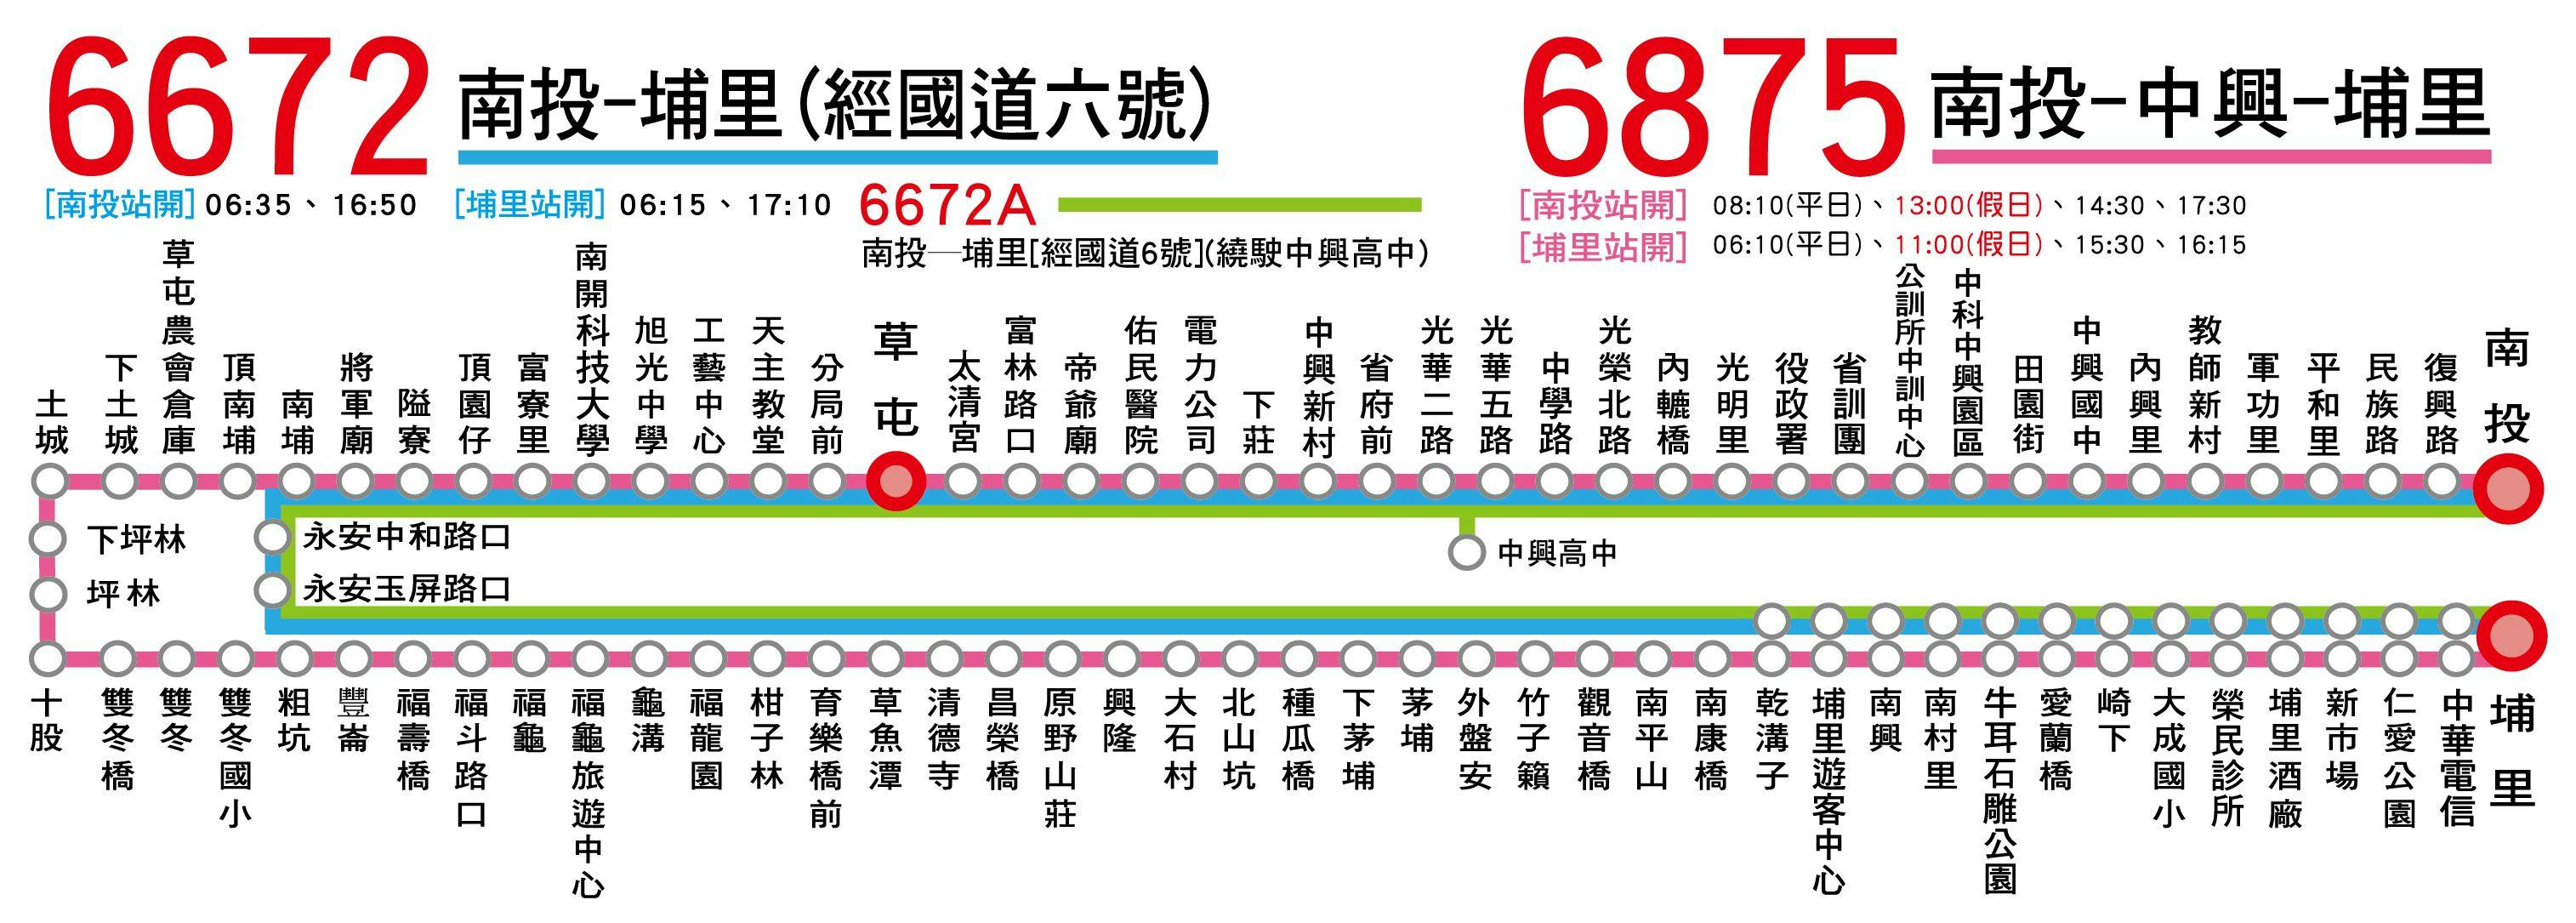 6672Route Map-Nantou Bus